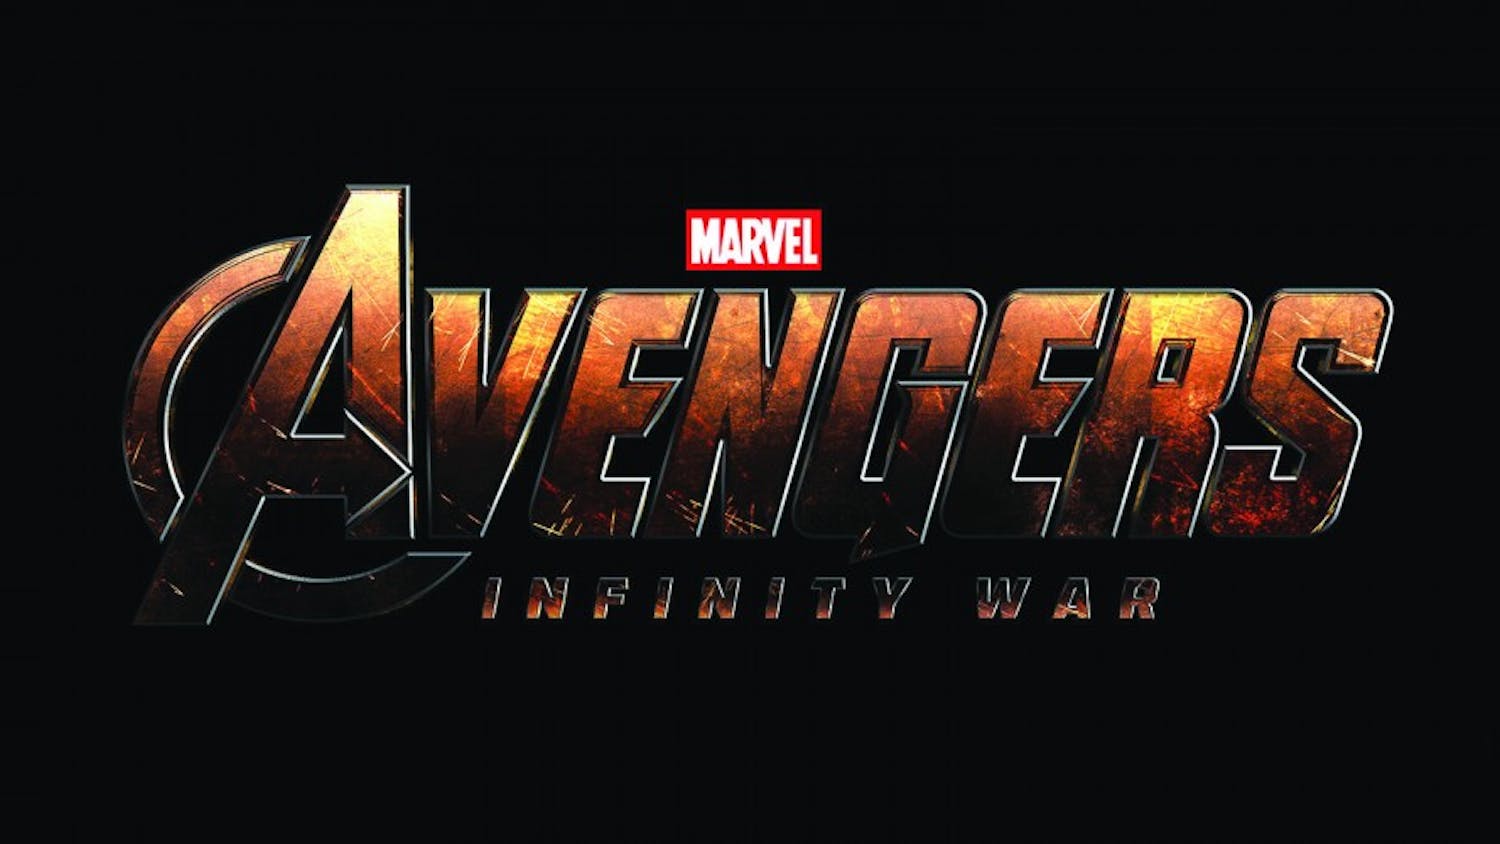 AvengersInfinityWar_wikimedia.jpg